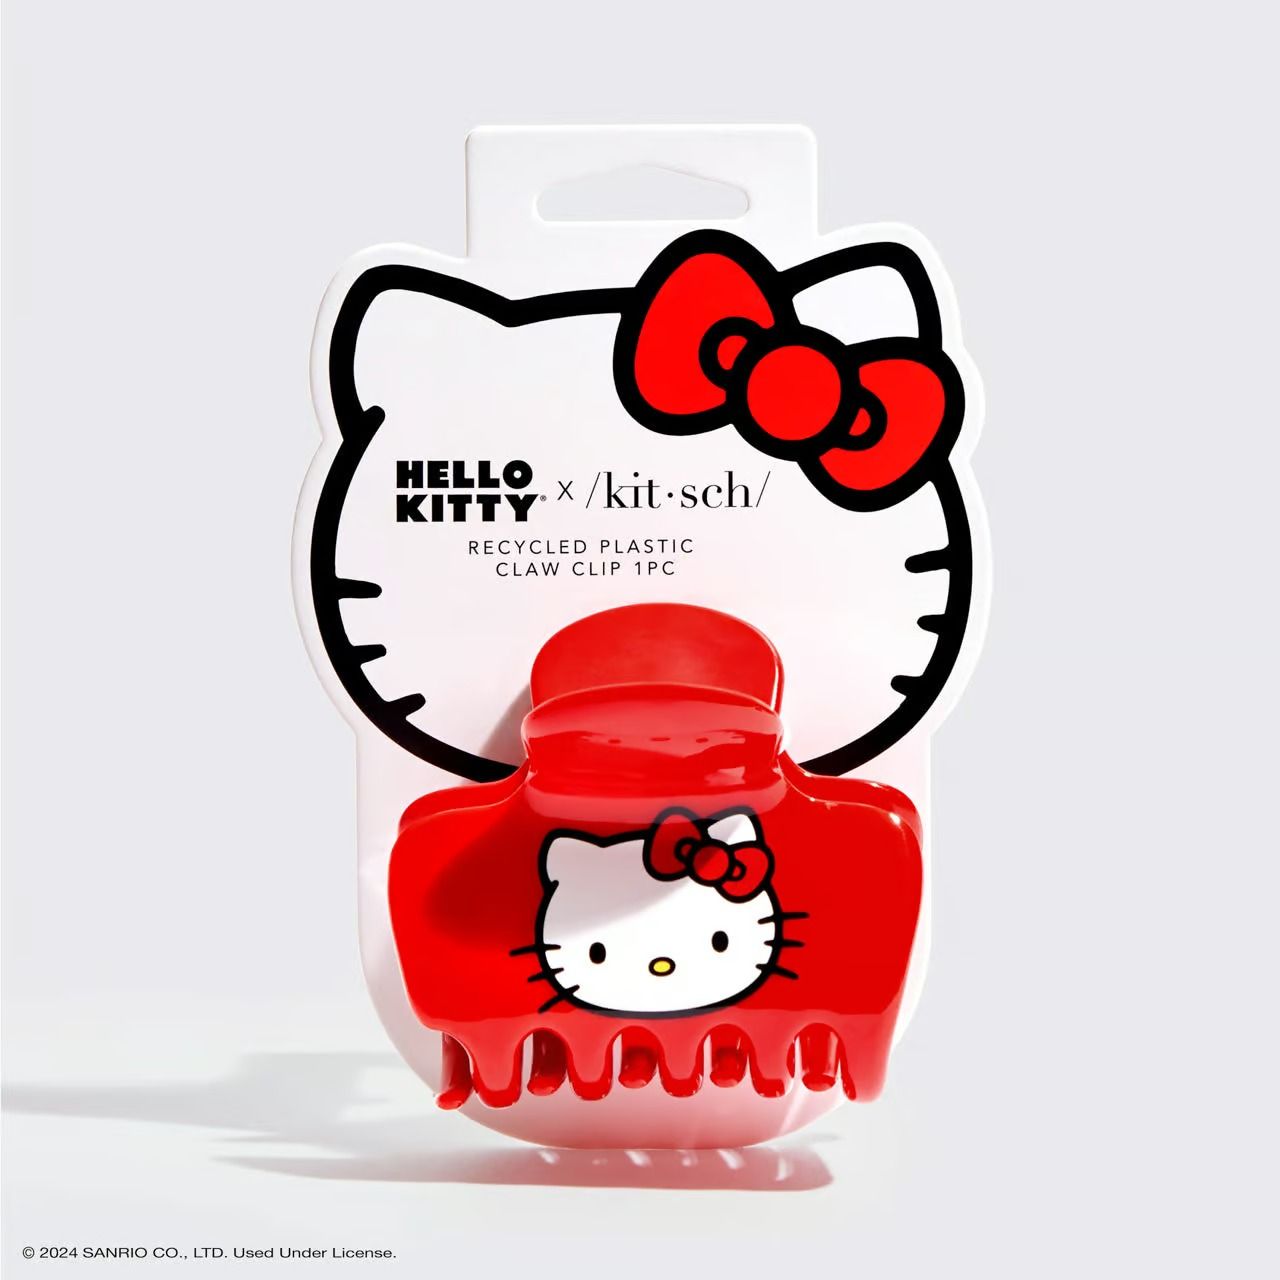 Hello Kitty & Kitsch выпустили официальную коллекцию средств по уходу за собой